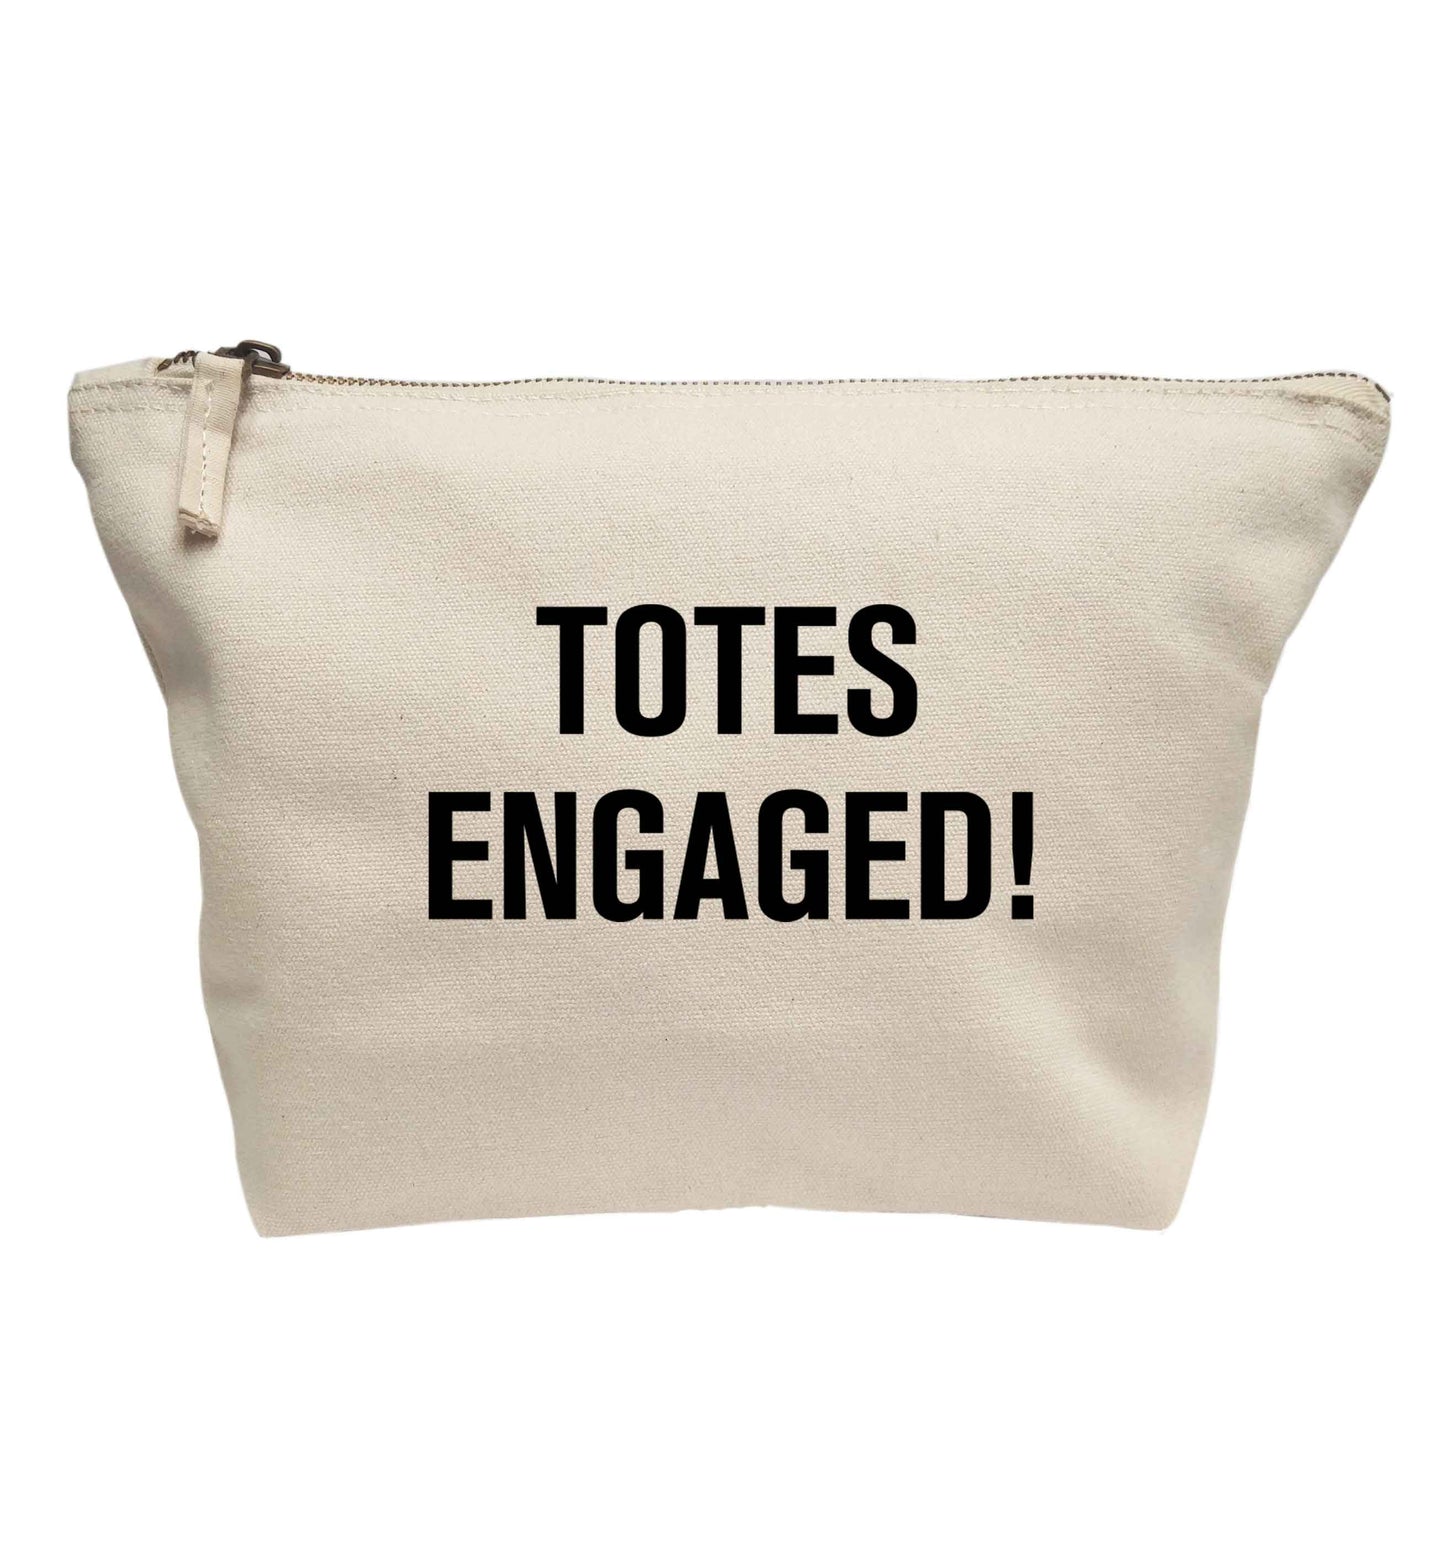 Totes engaged | Makeup / wash bag